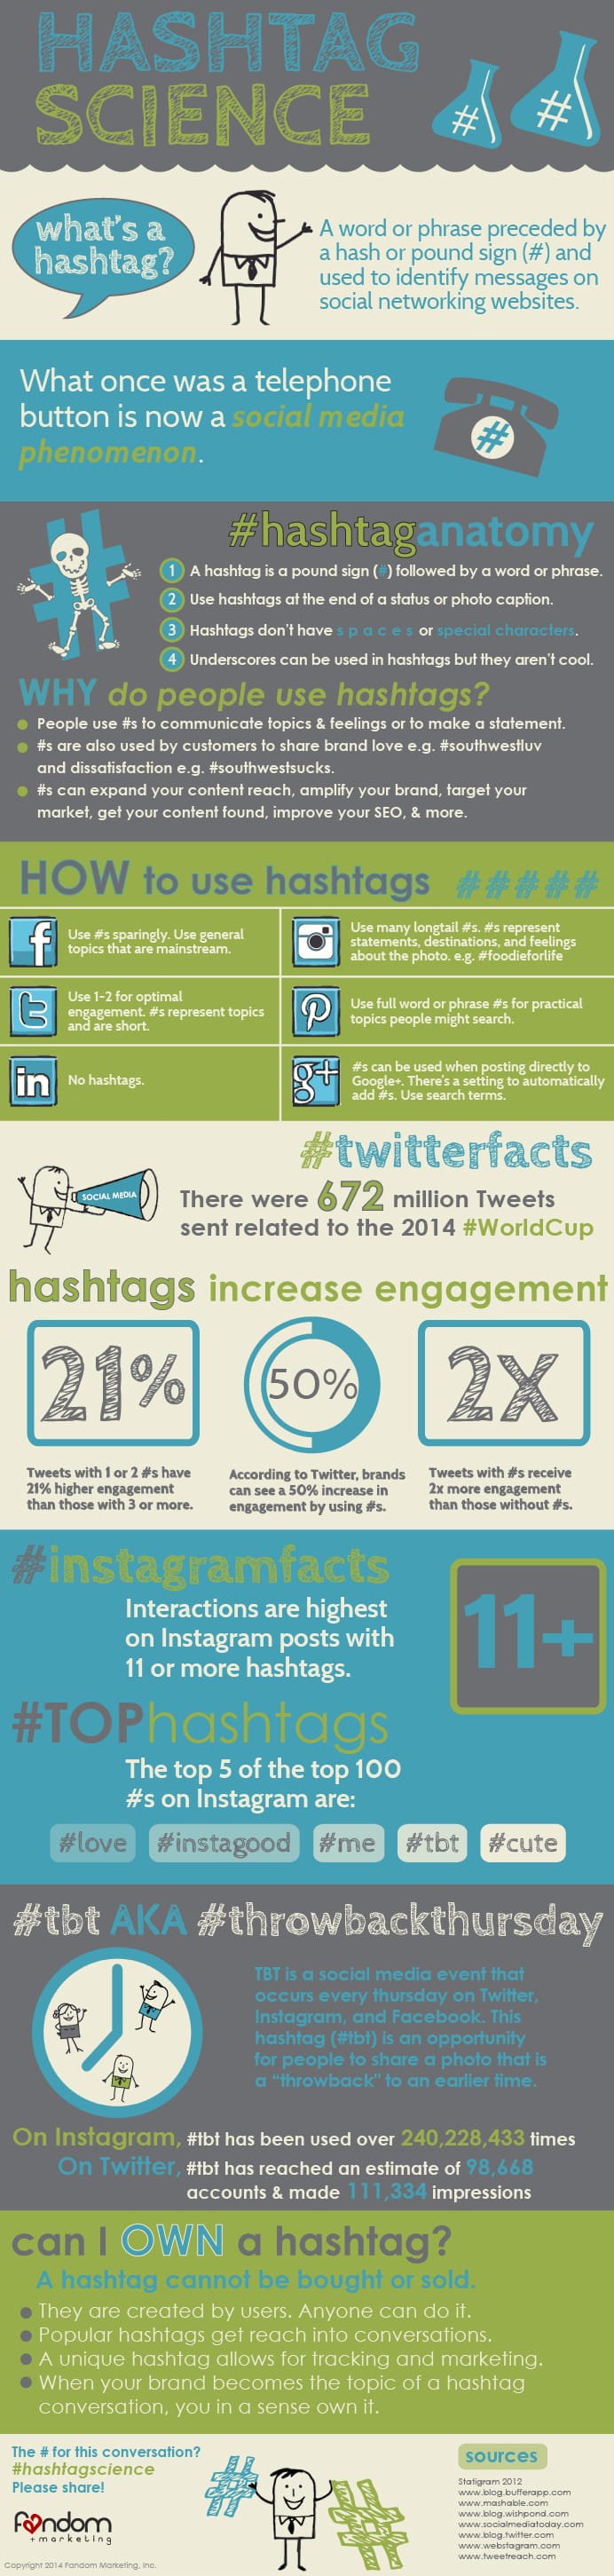 Hashtag Science Infographic_Fandom Marketing